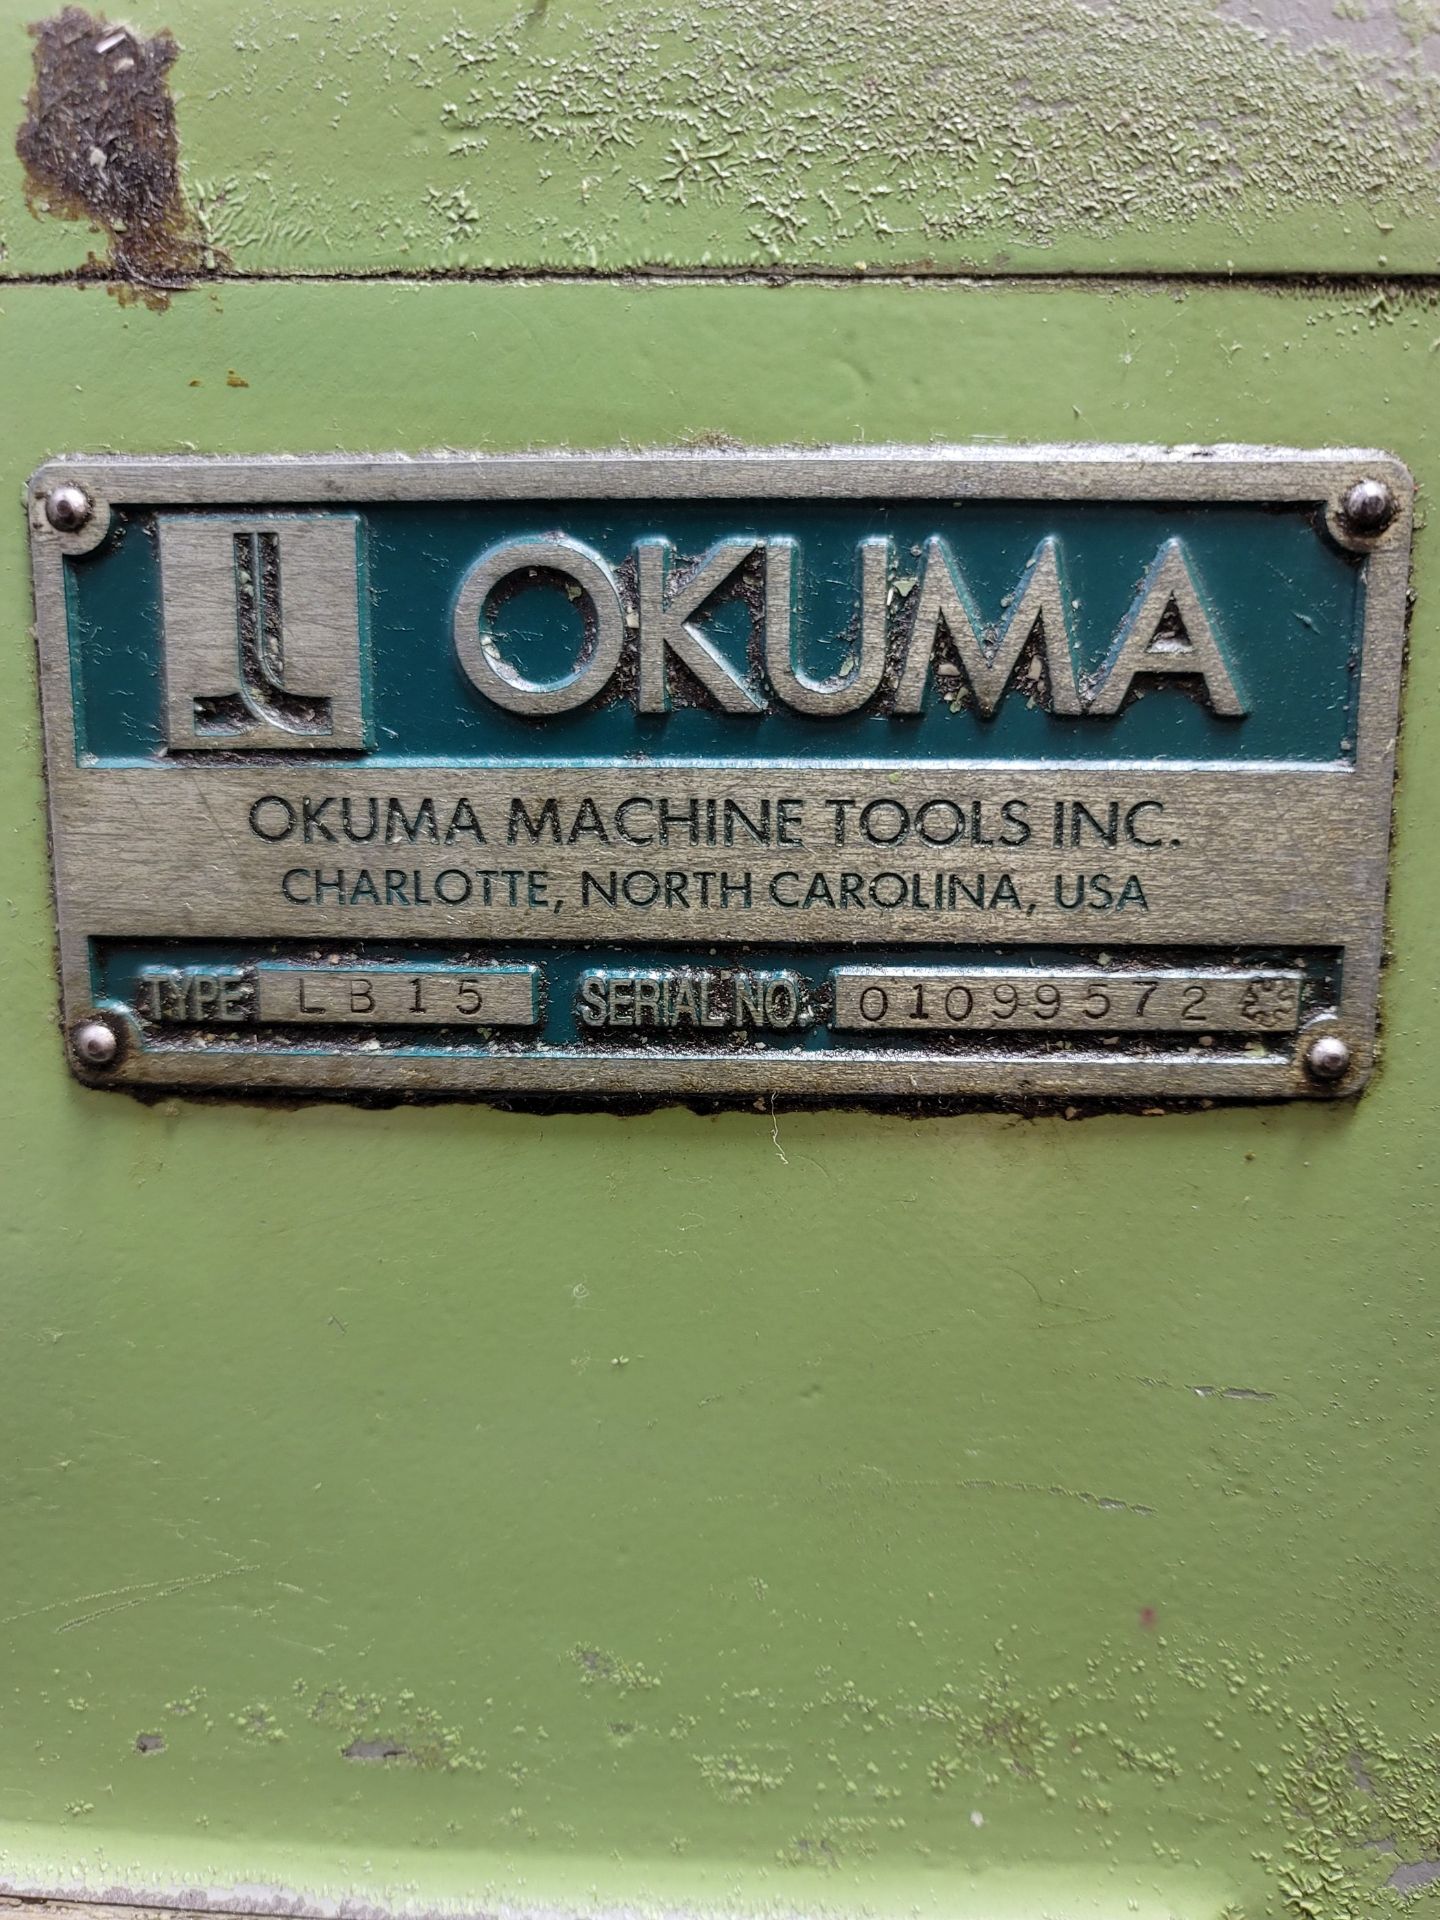 OKUMA LB15 TURNING CENTER, OSP5000L-G CONTROL, 8" HYDRAULIC CHUCK, 12-STATION ATC, TAILSTOCK, - Image 7 of 7